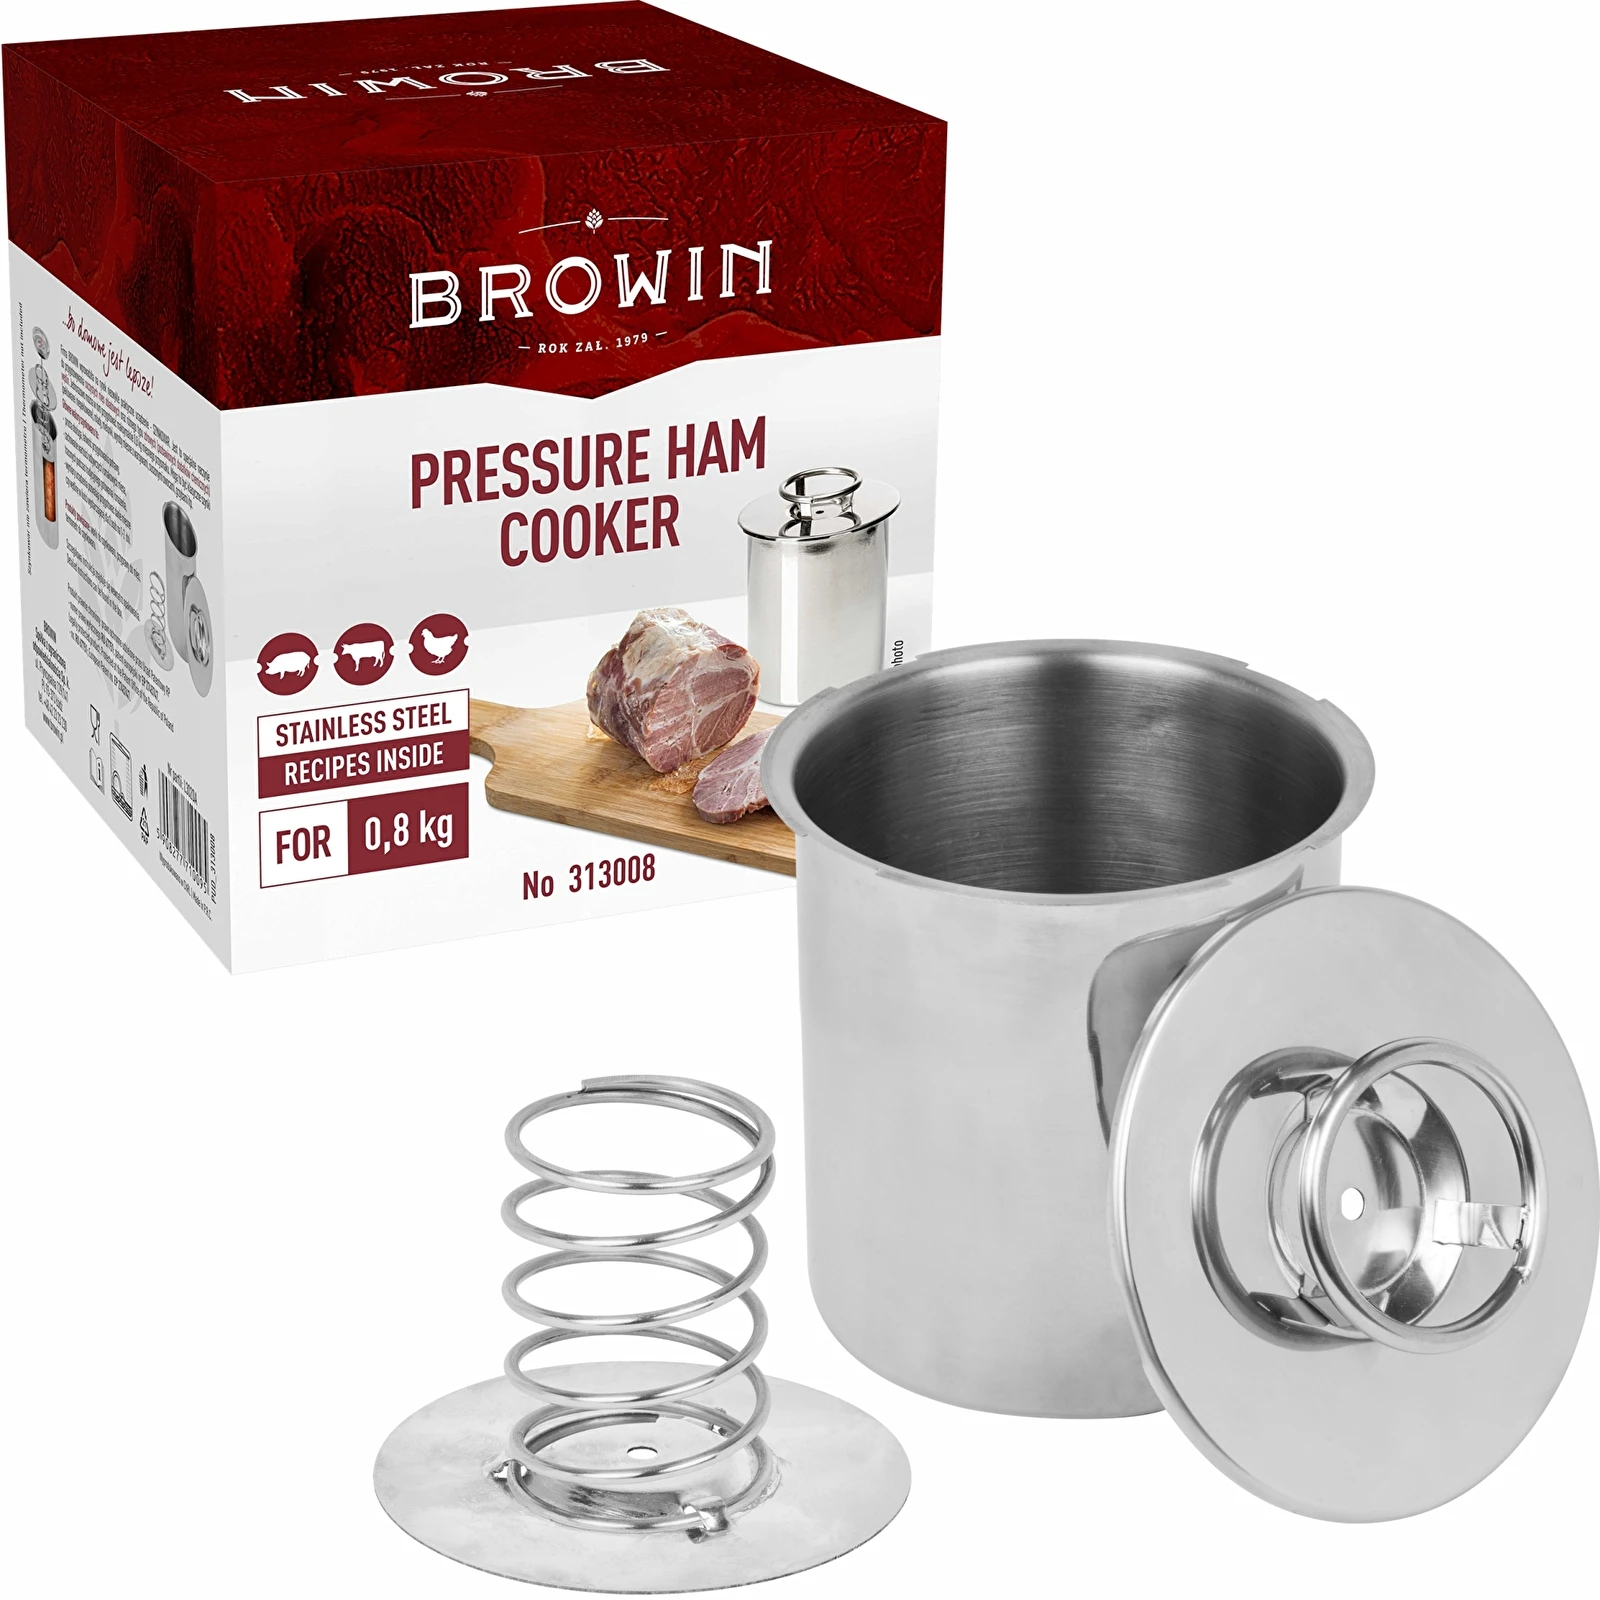 https://browin.com/static/images/1600/stainless-steel-press-ham-maker-pressure-ham-cooker-0-8-kg-313008_en.webp